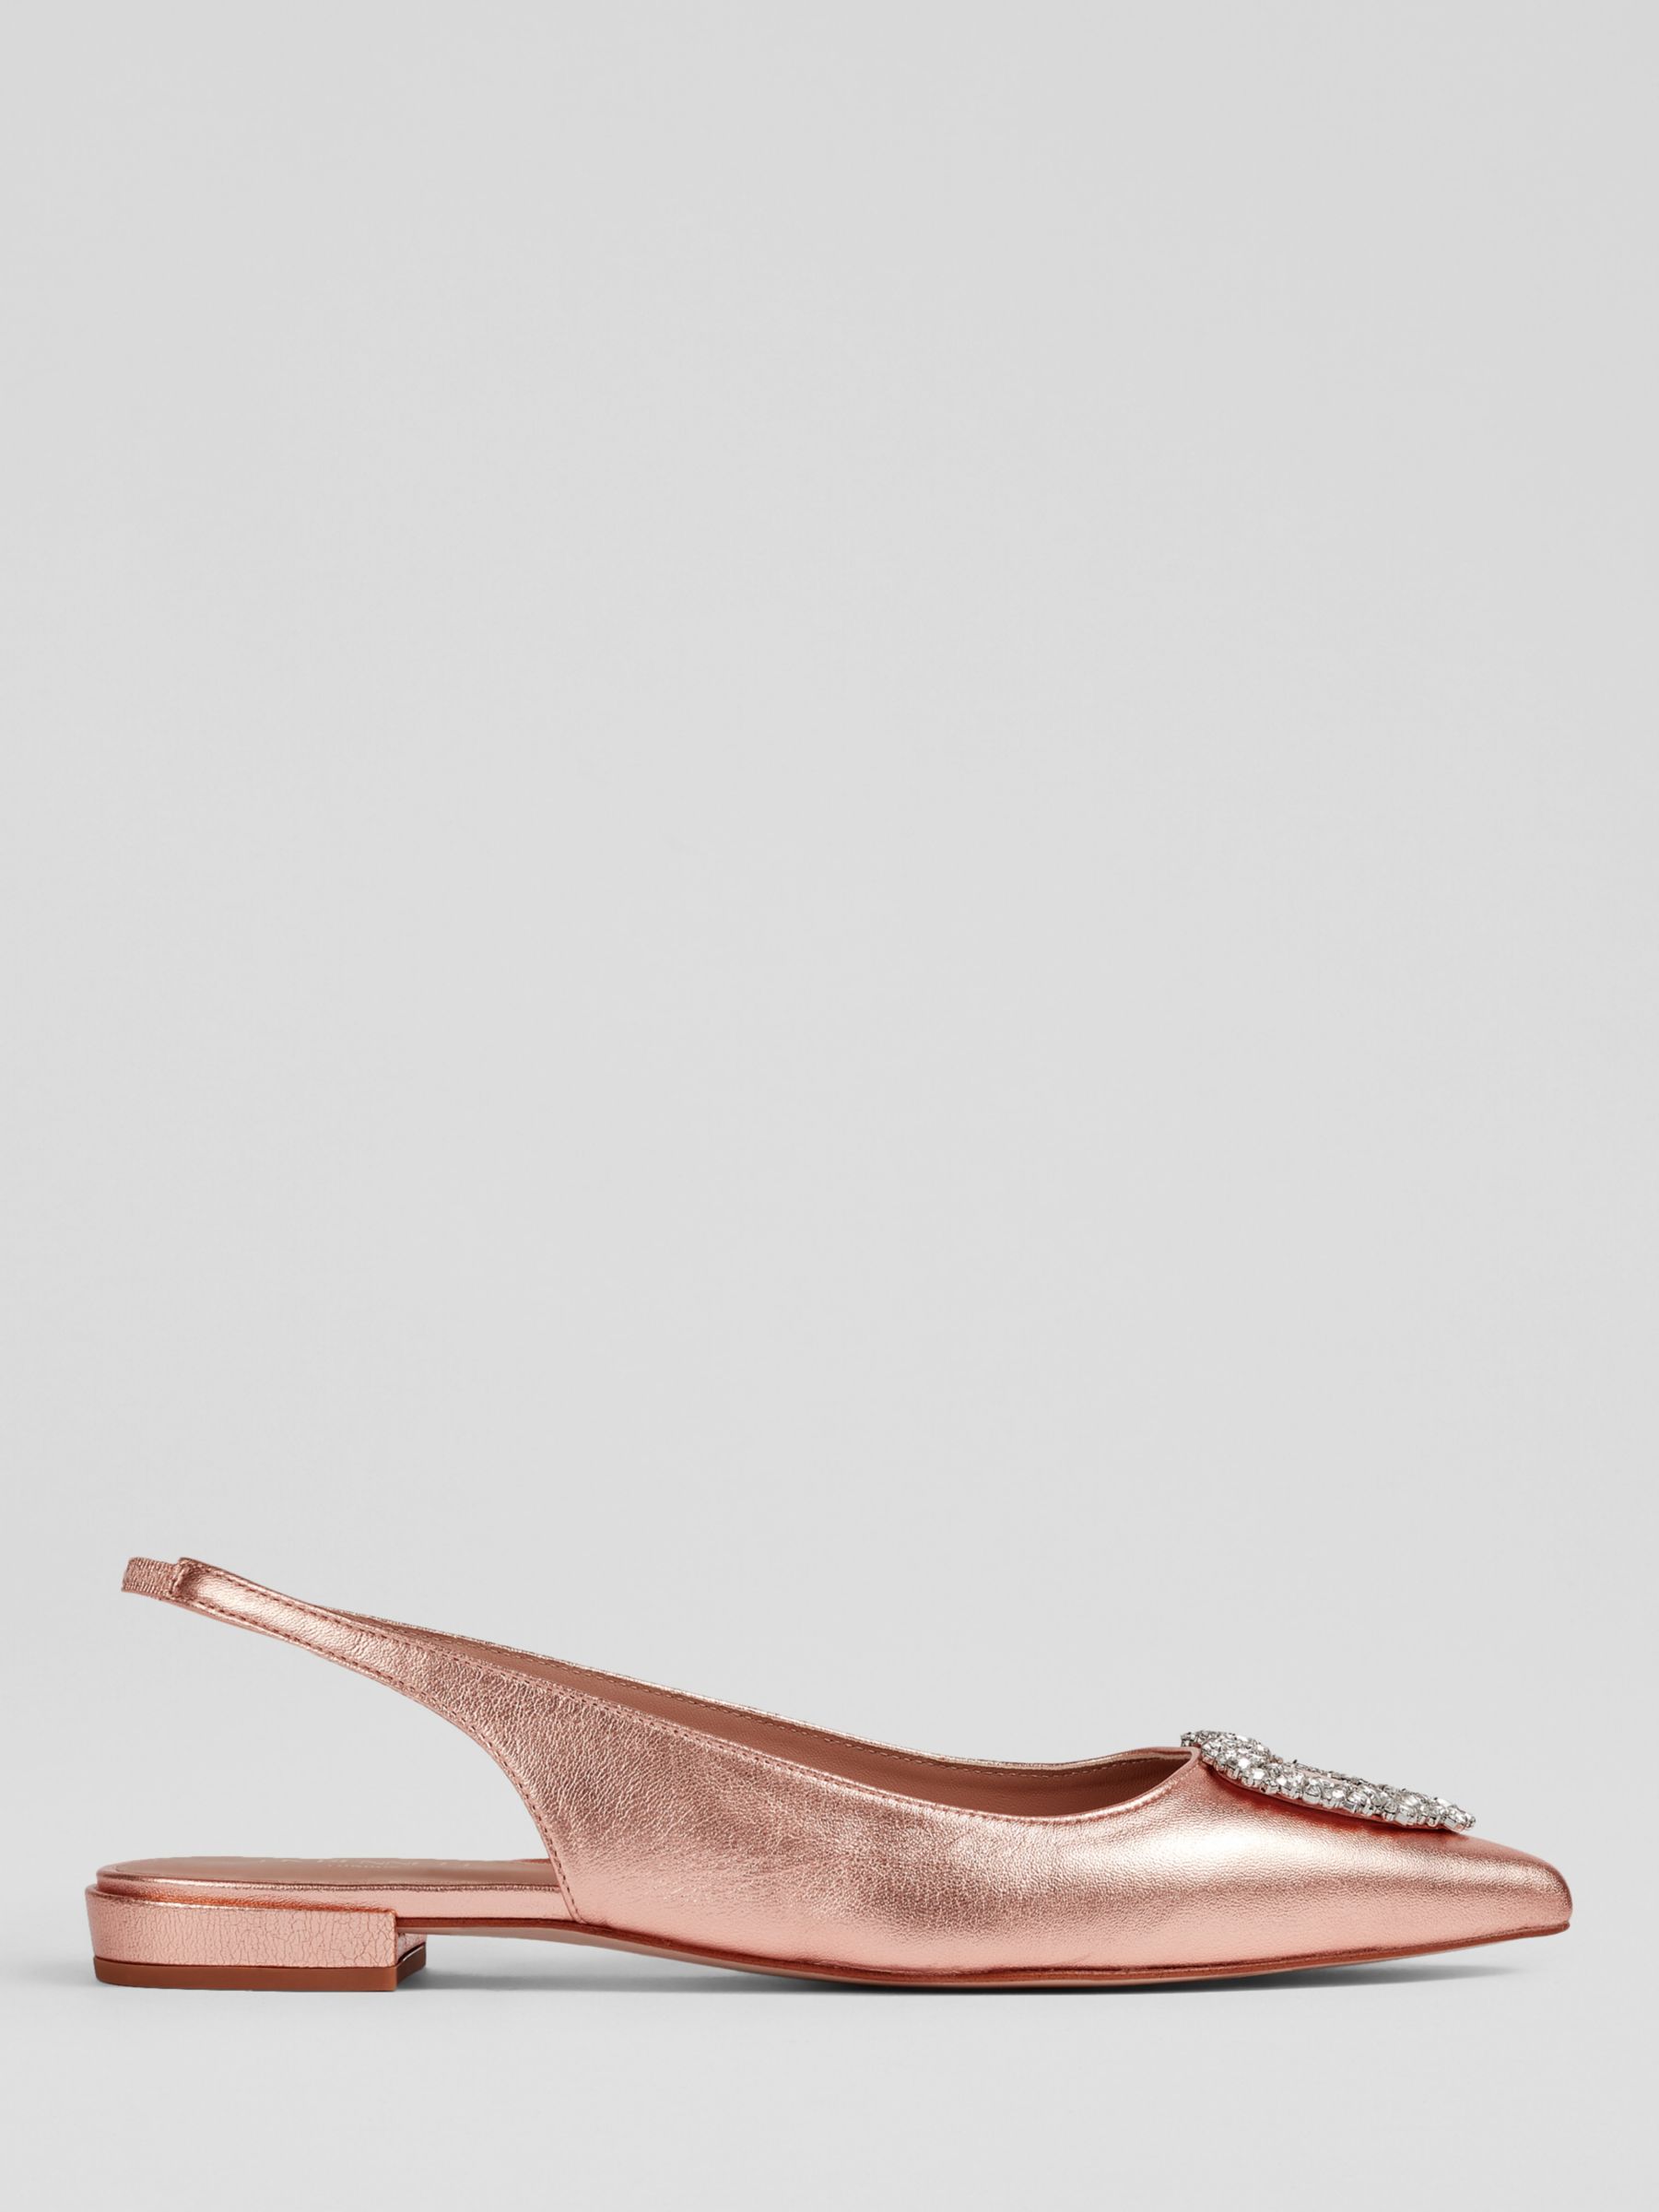 L.K.Bennett Luana Leather Slingback Shoes, Gold Copper, 8